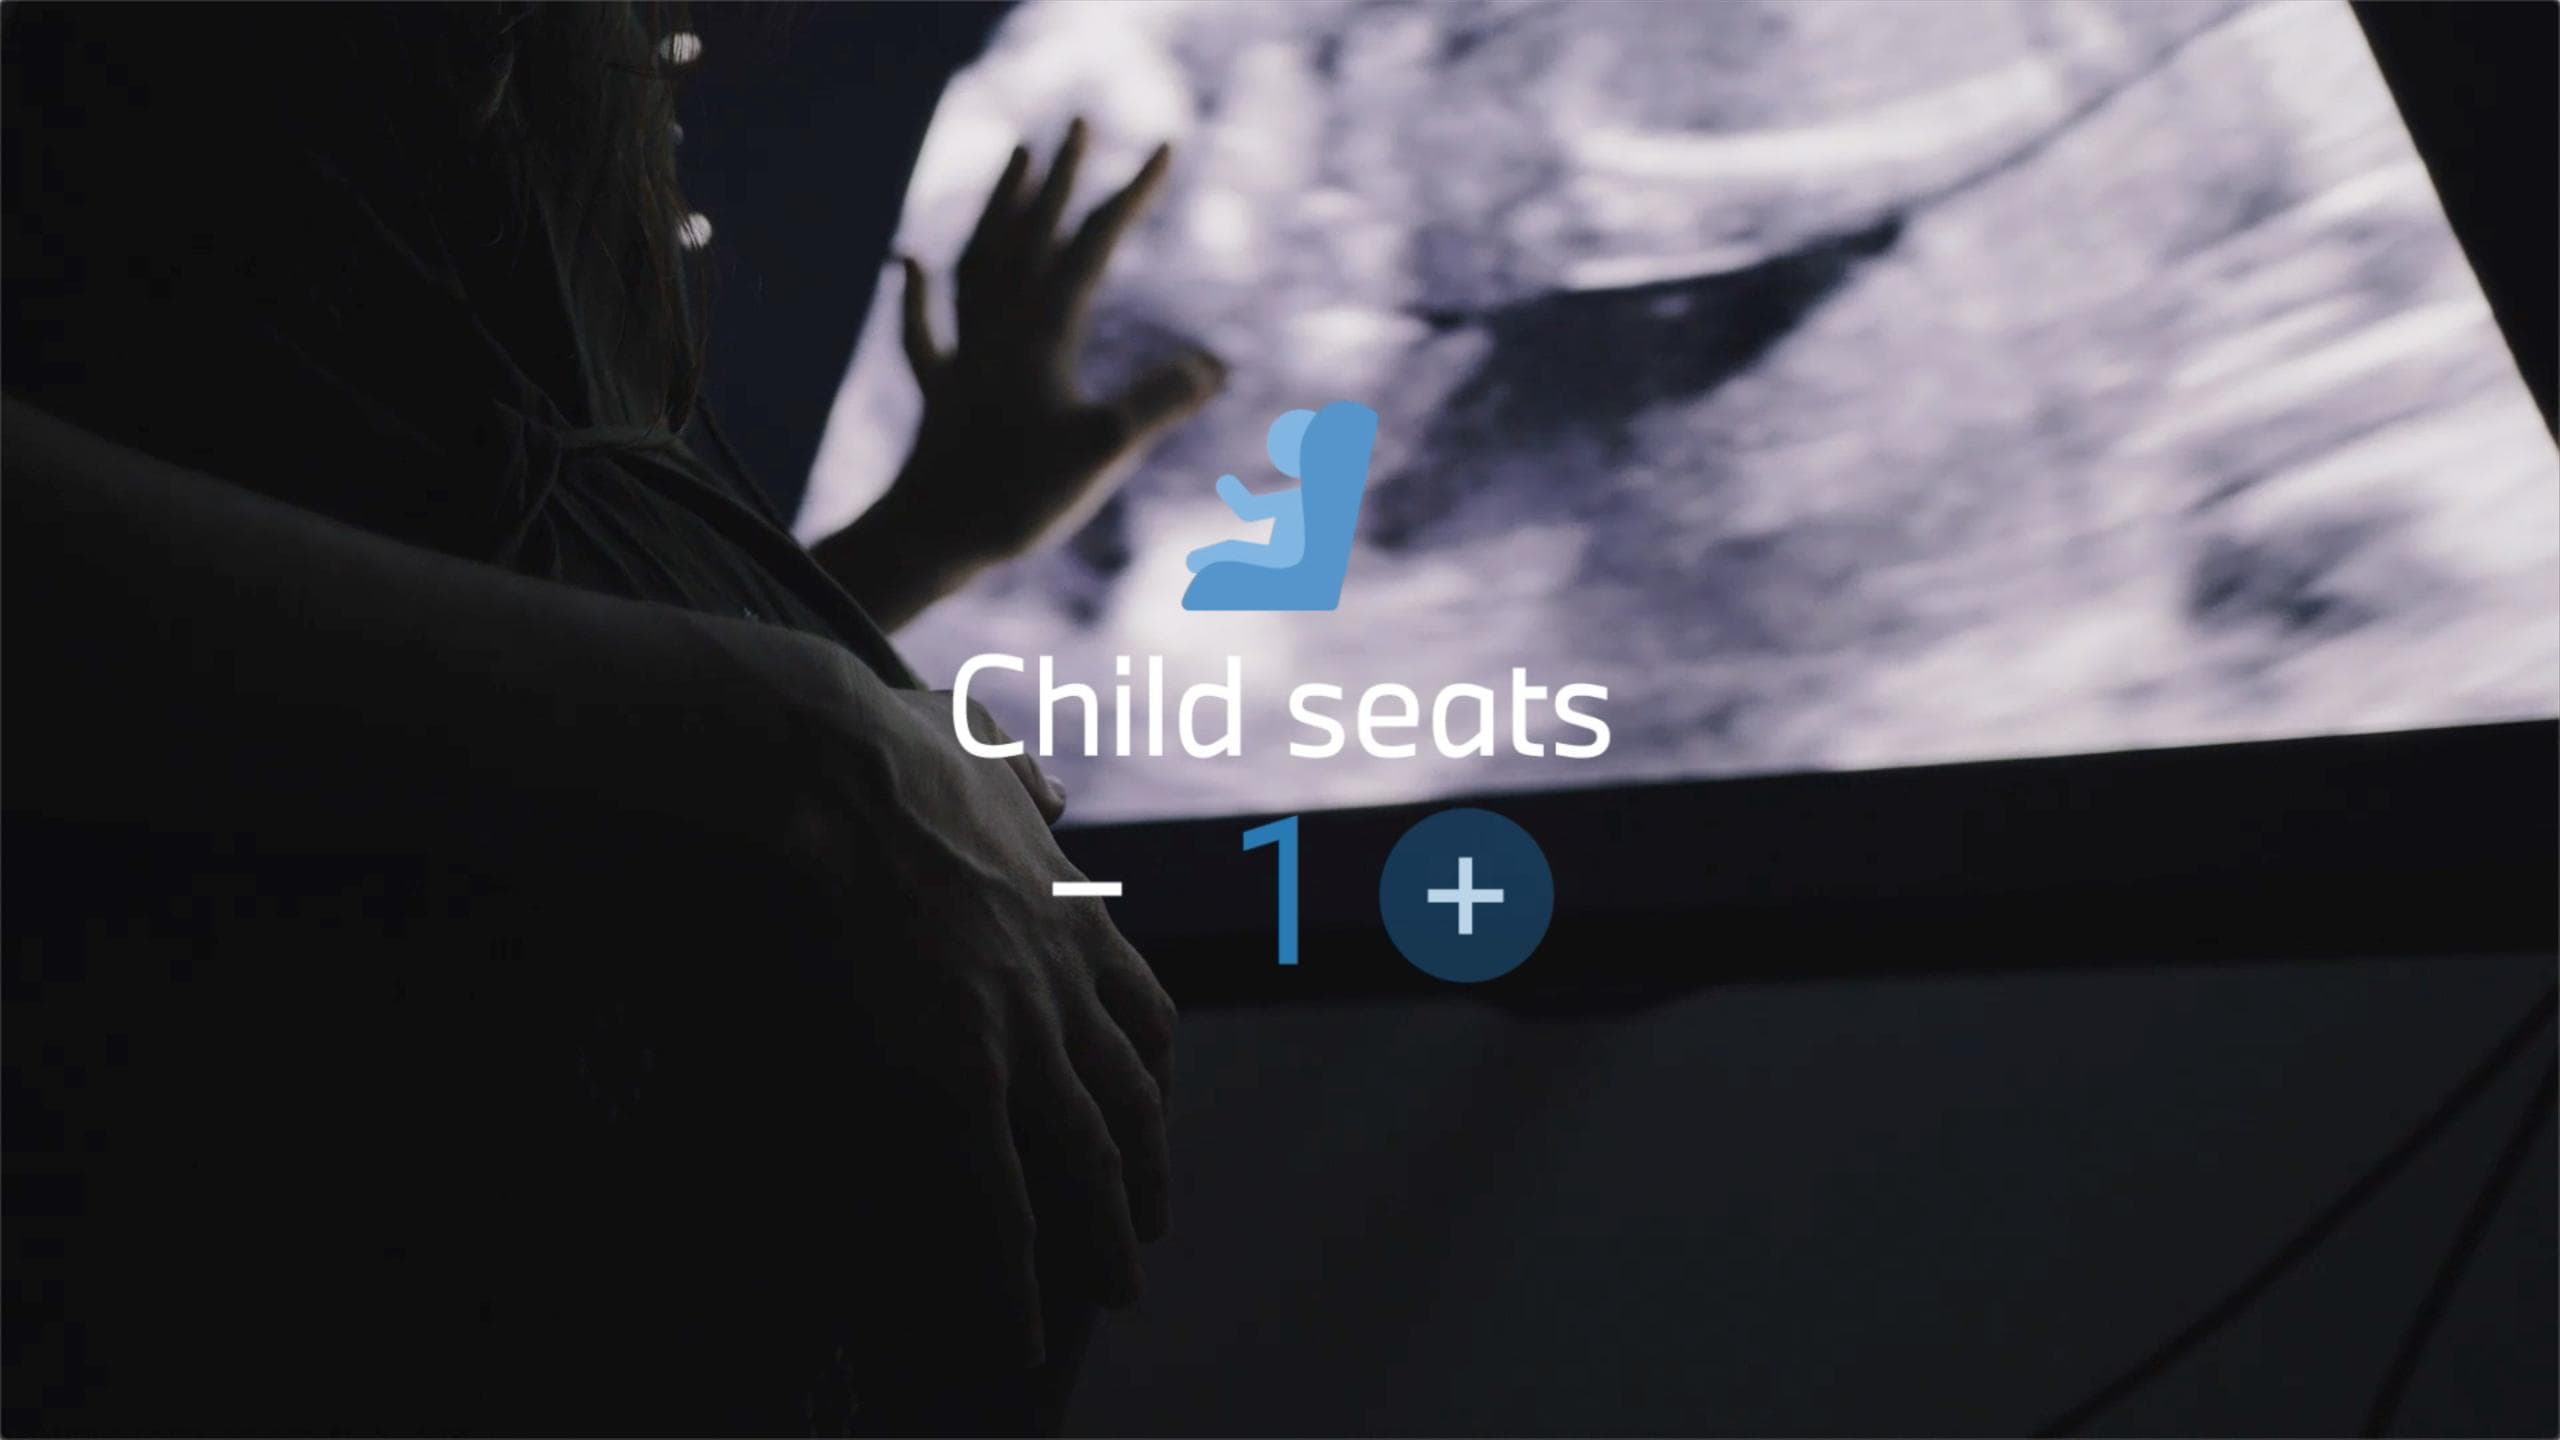 Choosing child seats